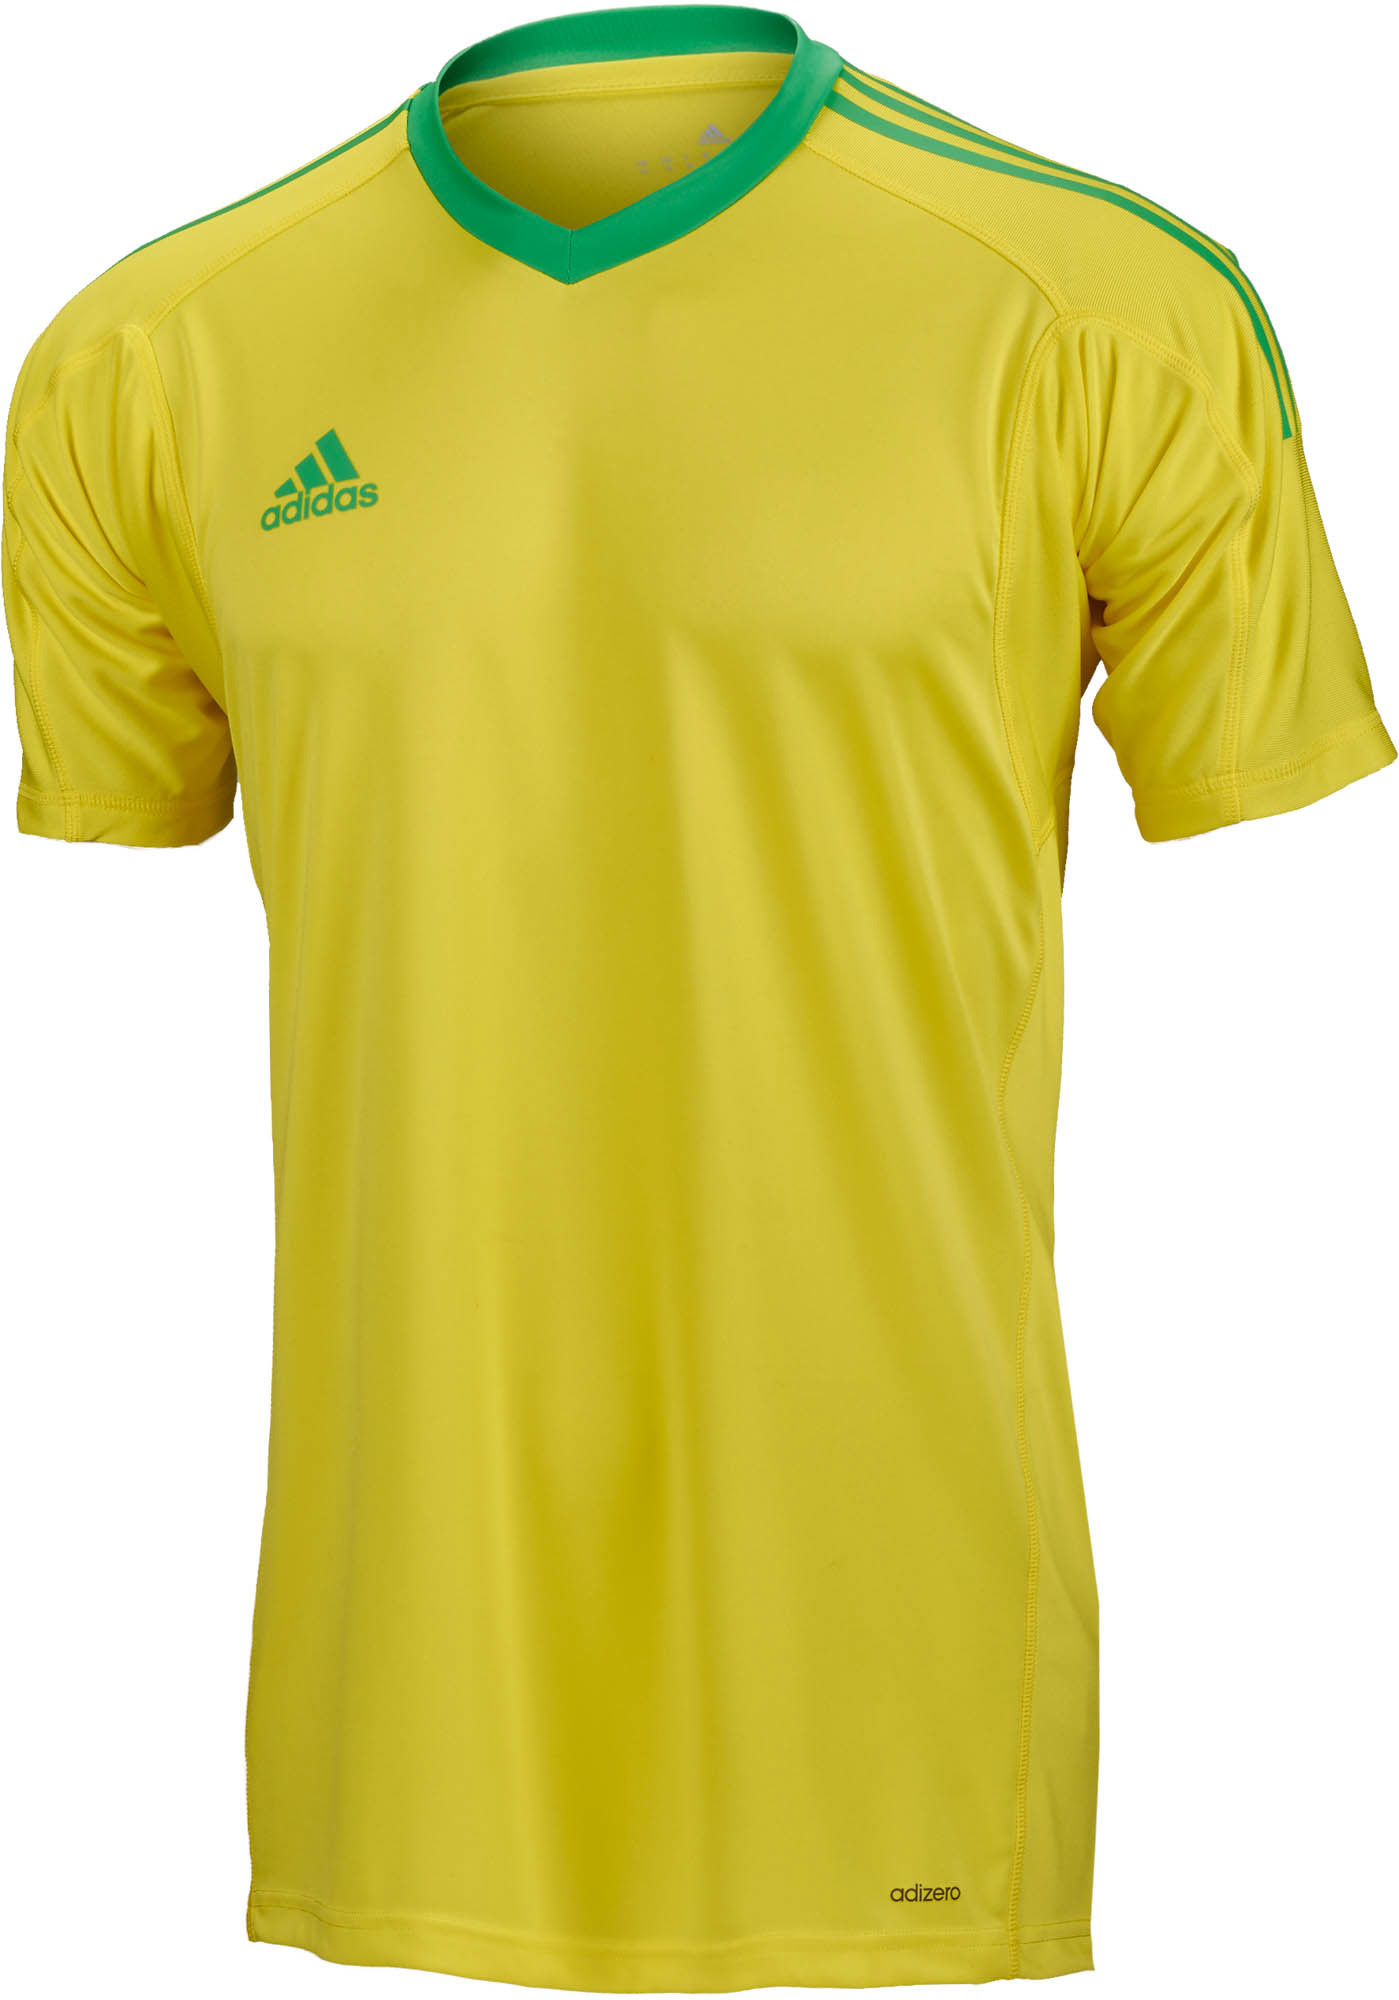 green adidas soccer jersey